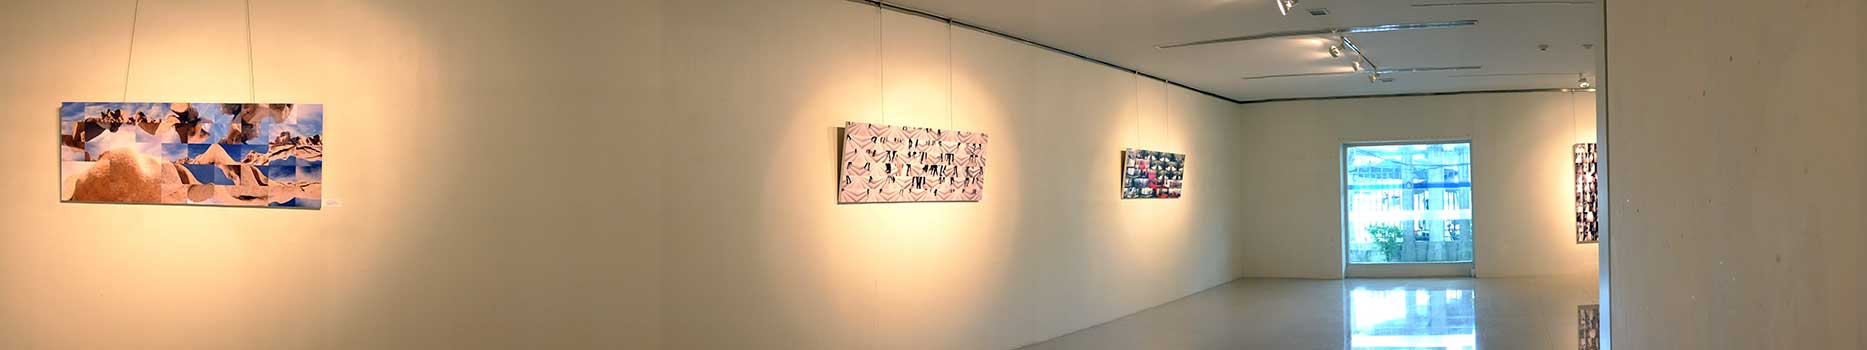 Exhibition Fragments by Nan-ta-wan Khoo-su-wan | นิทรรศการ เศษ-ส่วน โดย นันทวัน คูสุวรรณ